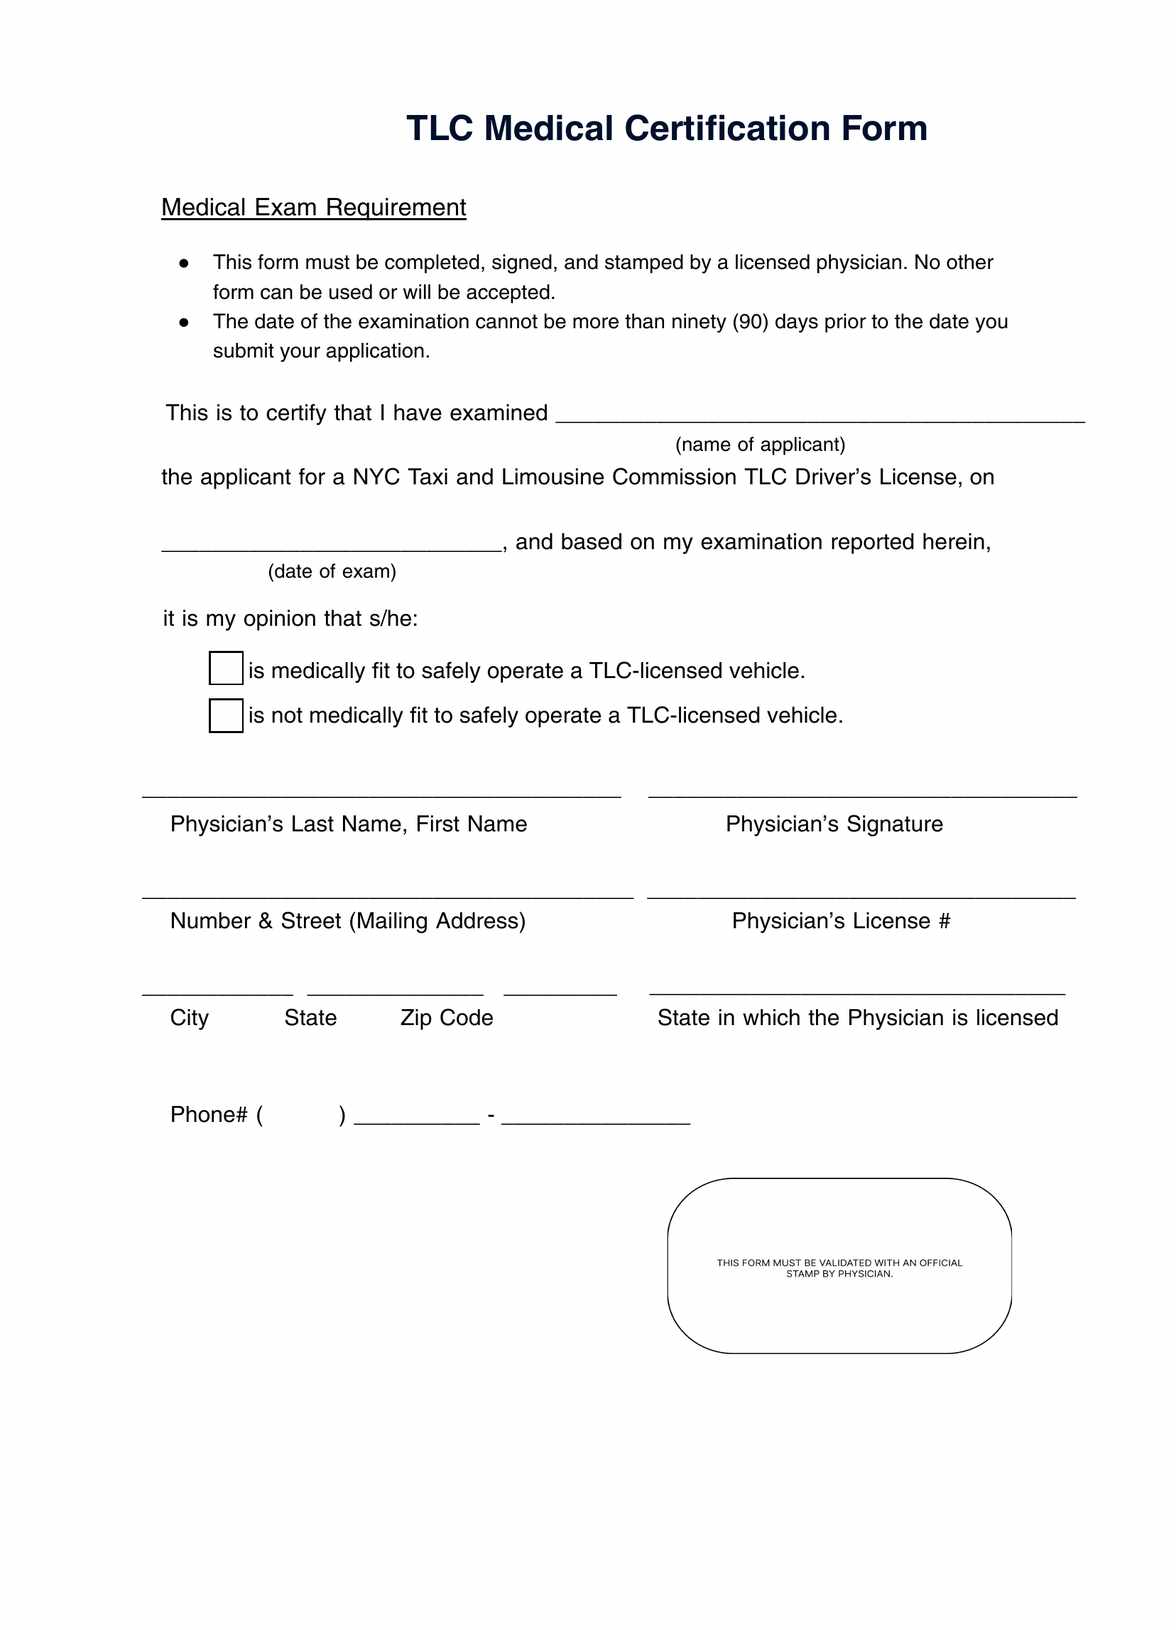 TLC Medical Certification Form PDF Example